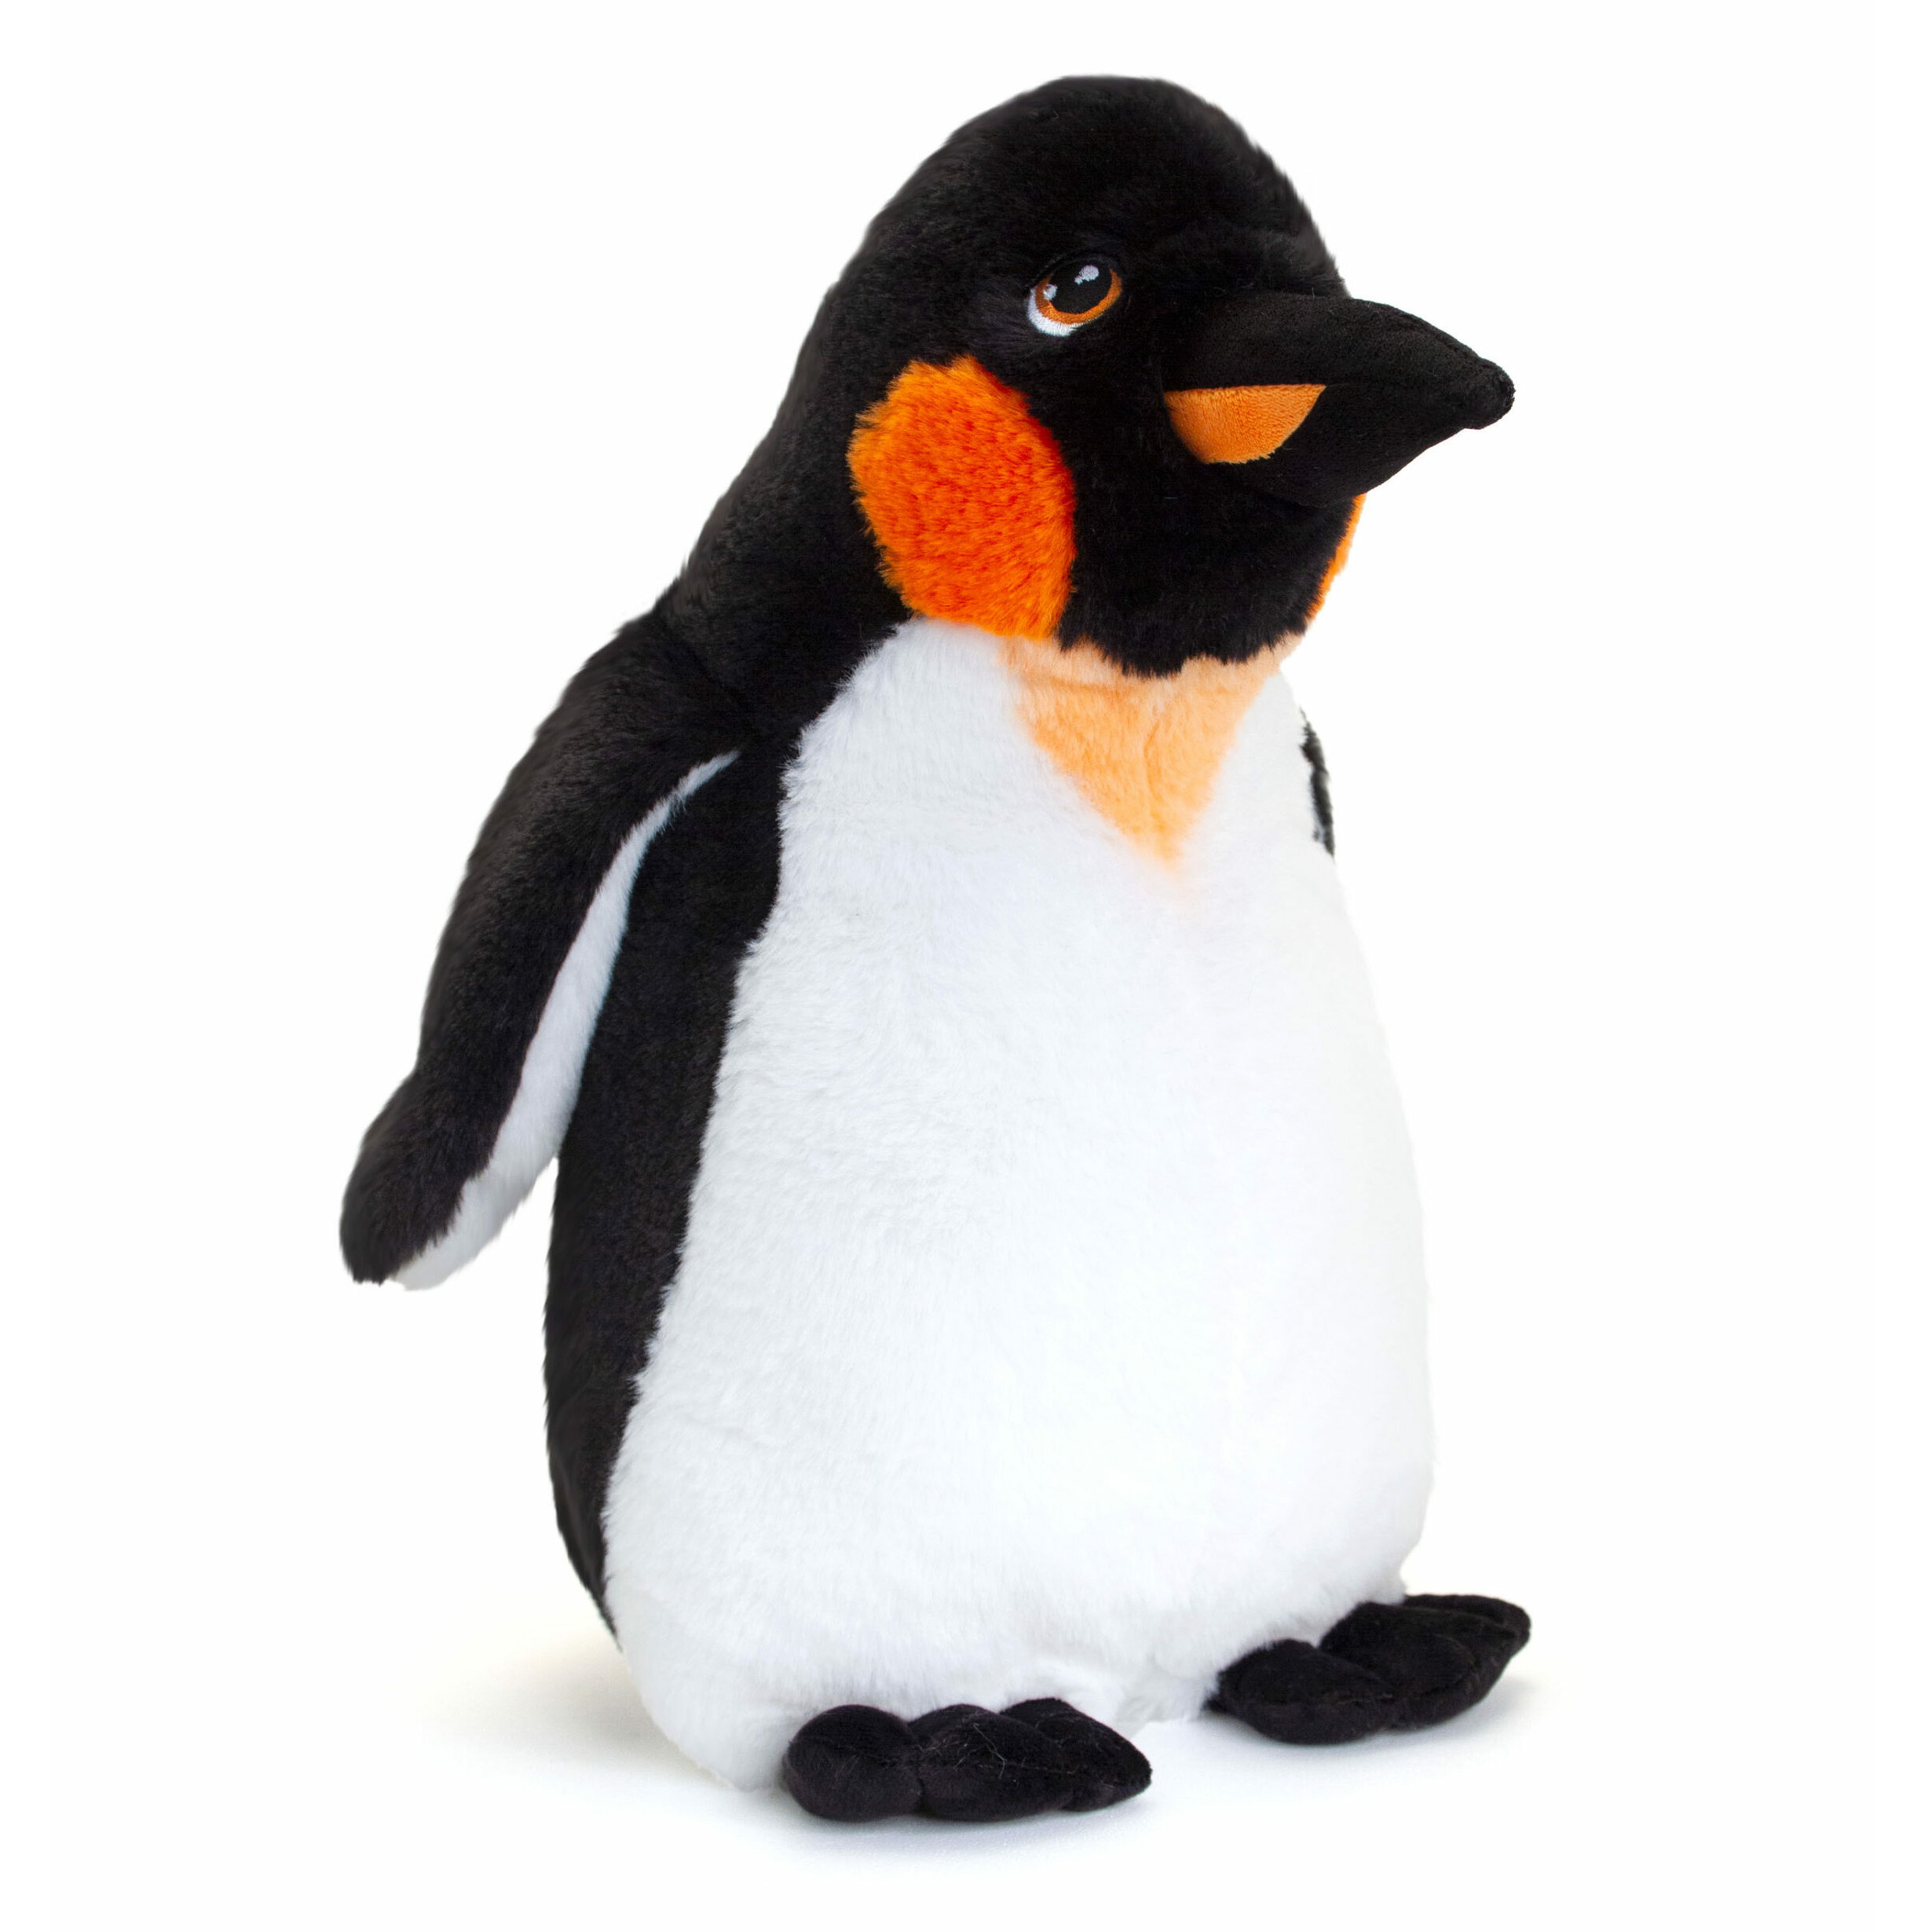 Keel Toys pluche keizers pinguin knuffeldier wit-zwart staand 40 cm